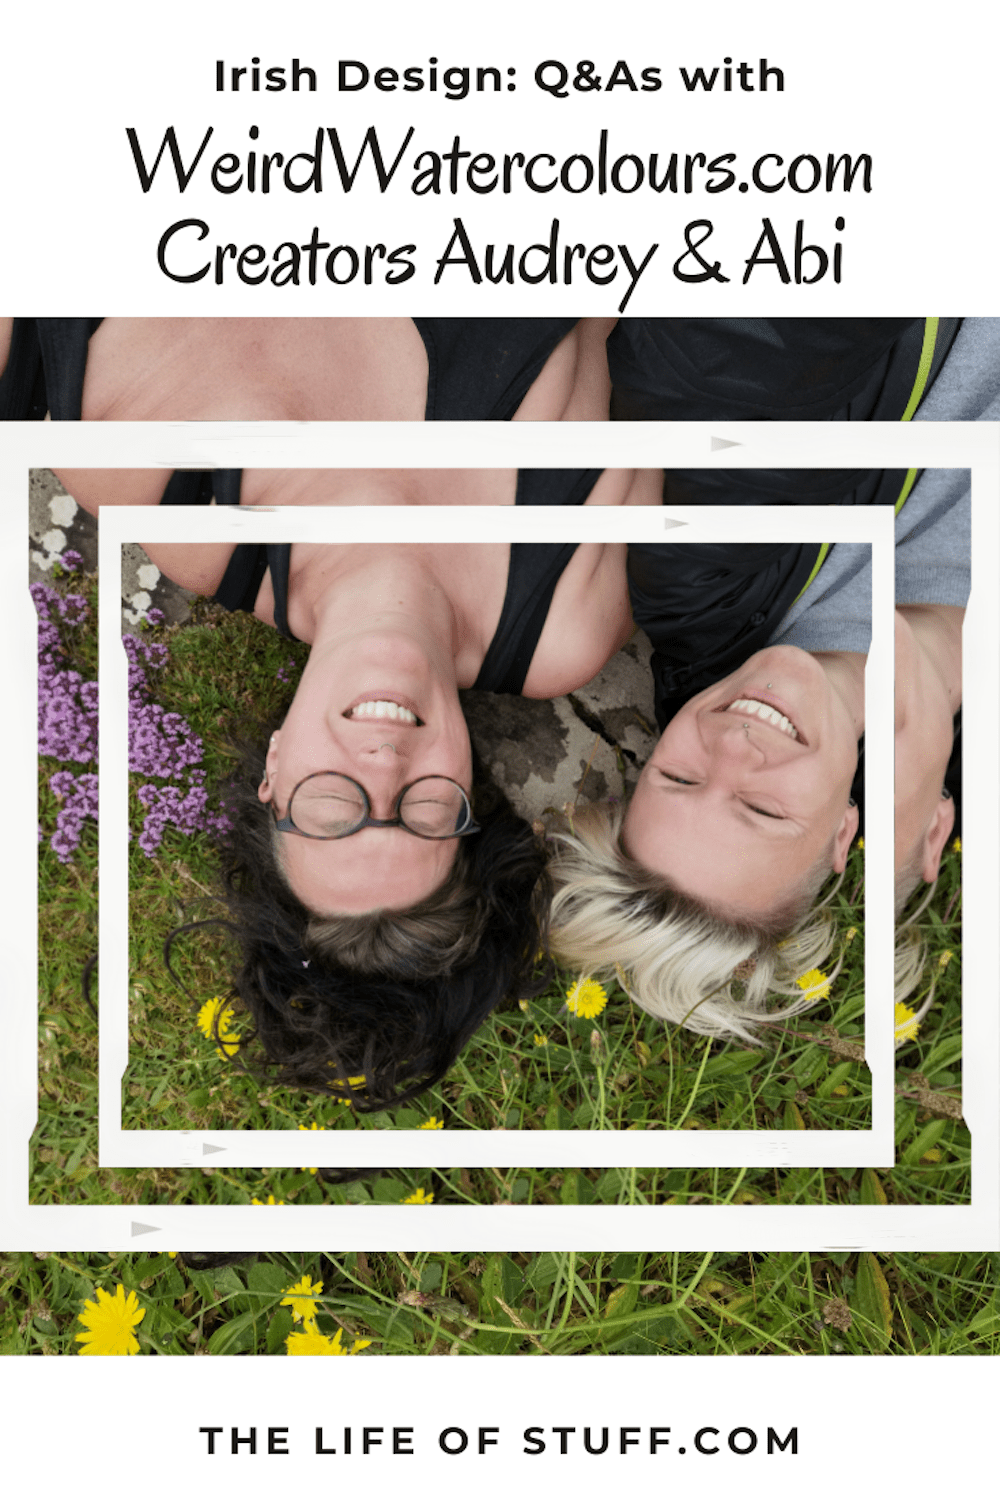 Irish Design - Q&As with WeirdWatercolours.com Creators Audrey & Abi - The Life of Stuff